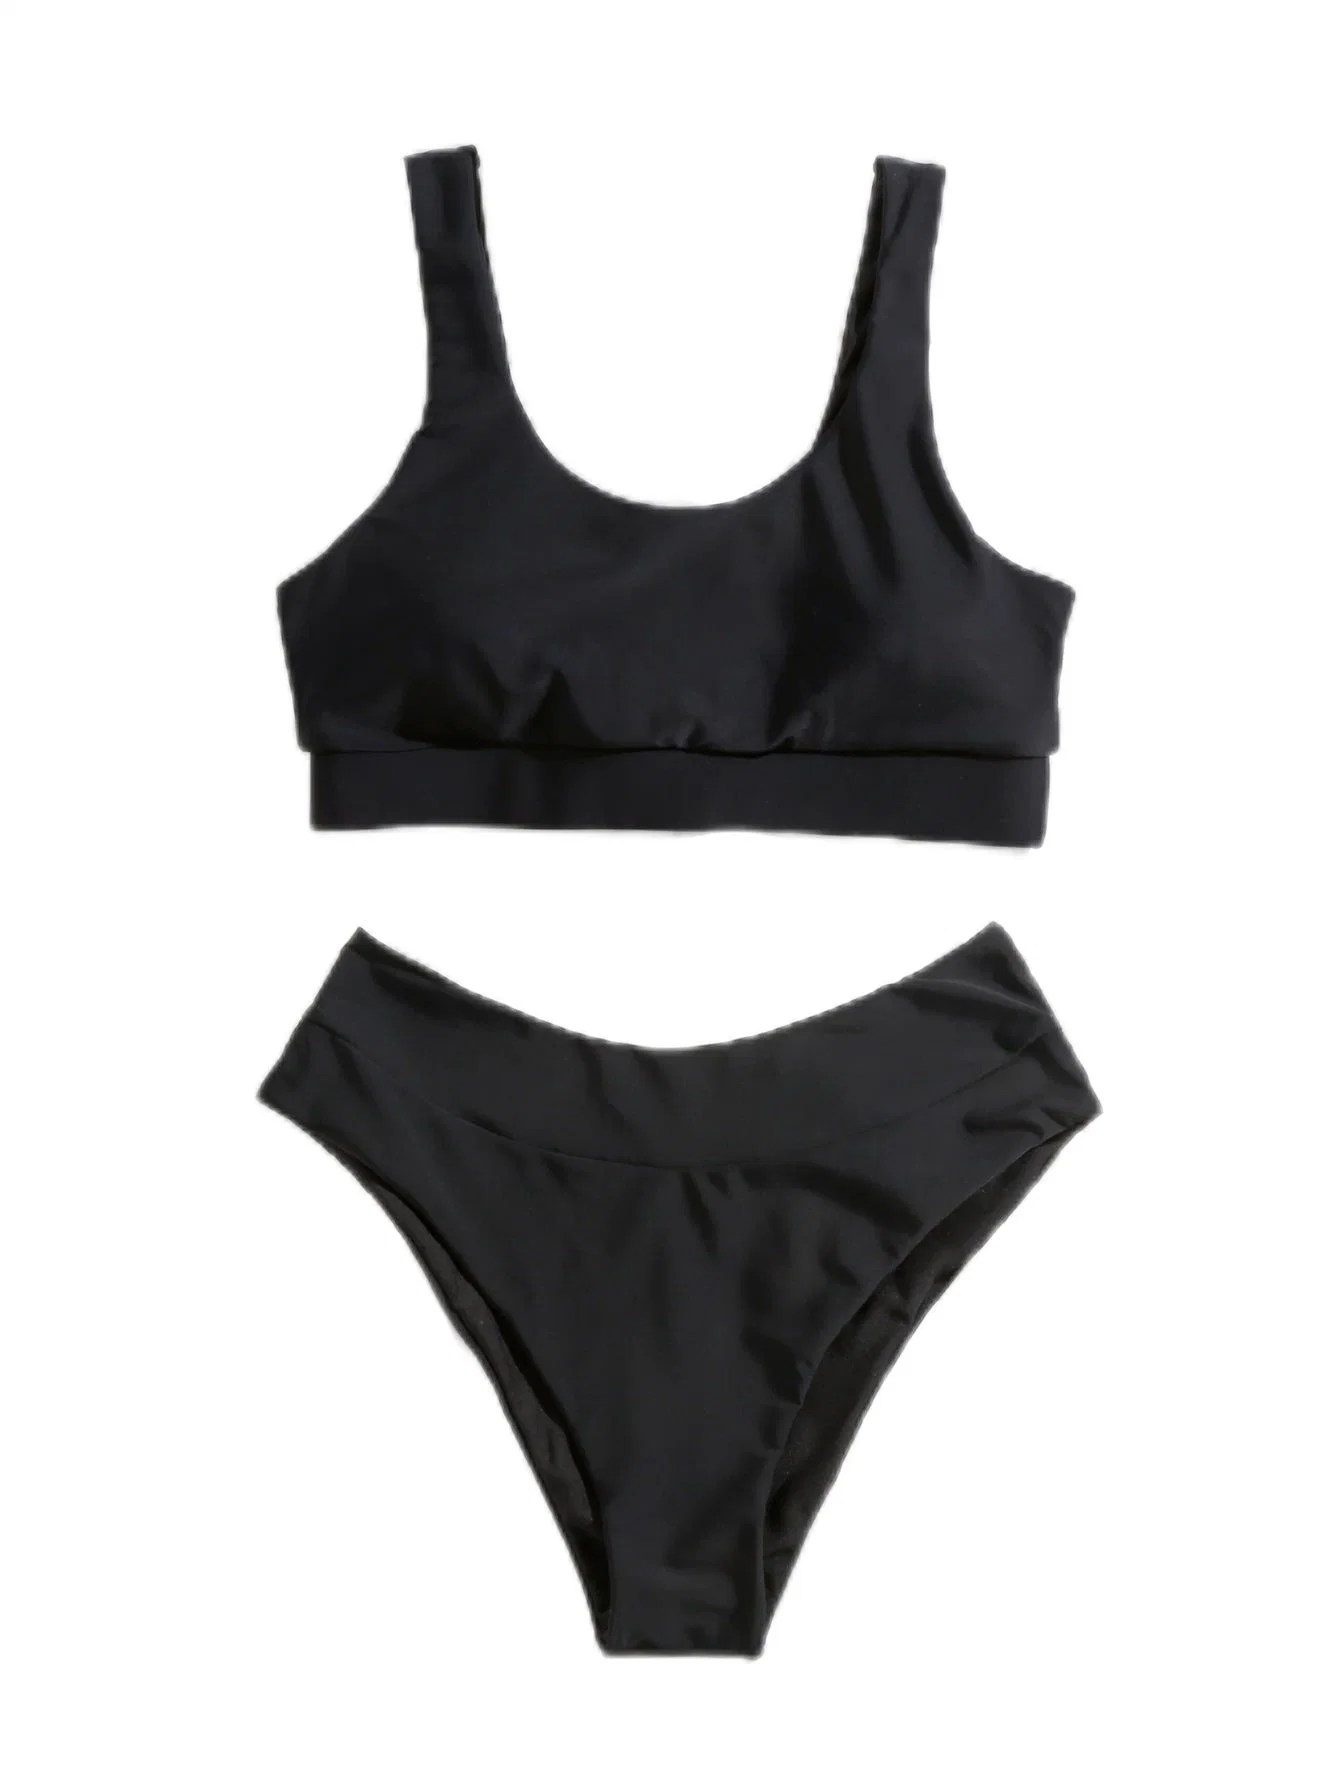 Beachwear Solid Bikini Set Tank Top High Cut Bathing Suit